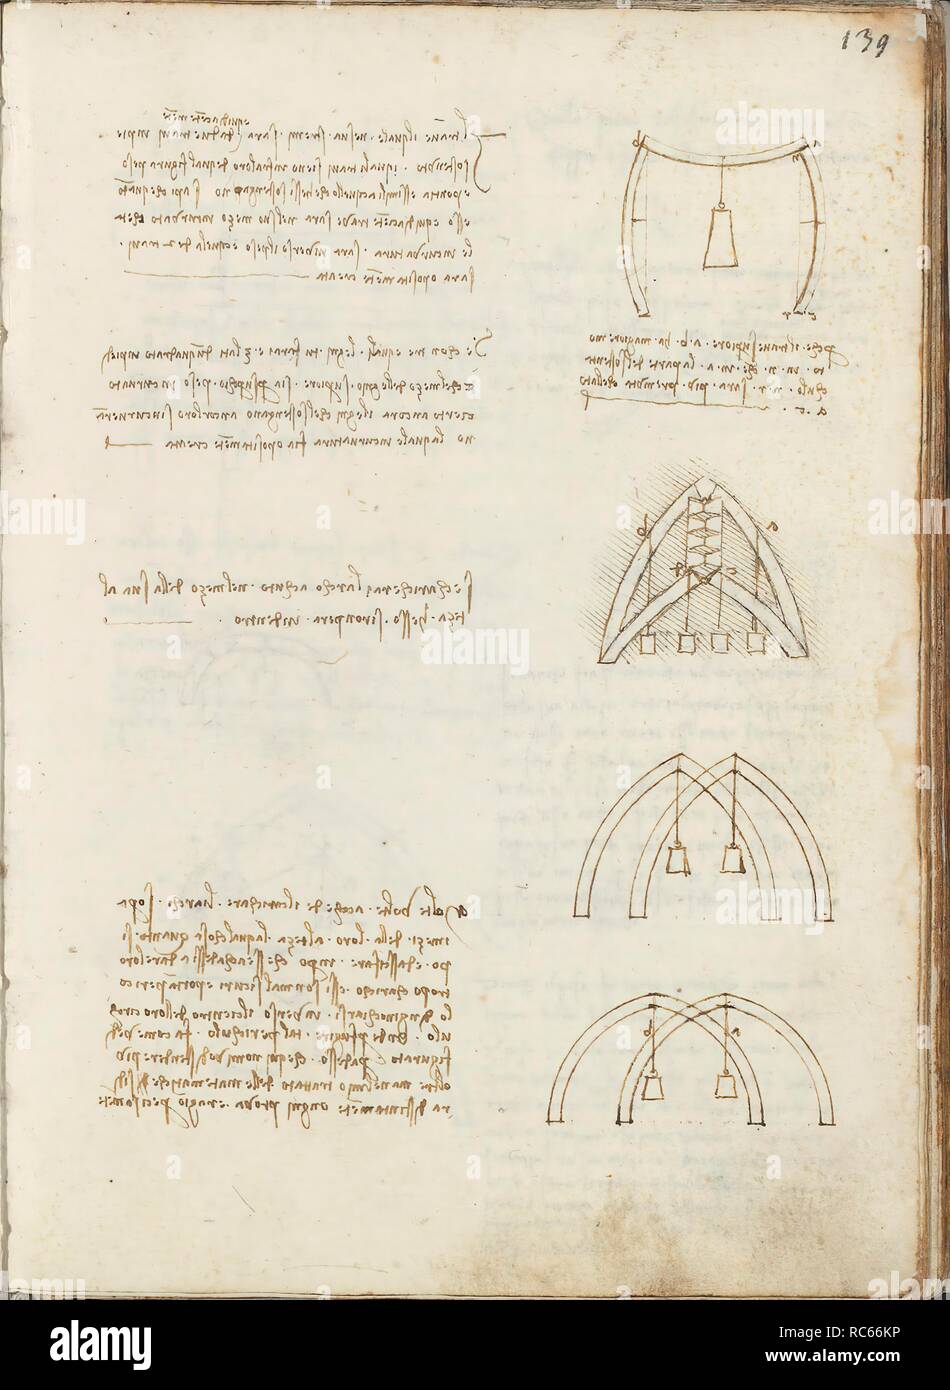 Folio f 139r. Codex Madrid I (Ms. 8937) 'Treaty of statics and mechanics', 192 folios with 384 pages. Internal format: 215 x 145 mm. CIVIL ENGINEERING, CONSTRUCTION. APPLIED MECHANICS (MACHINES AND WITS). MENTION OF MATERIALS. PRINCIPLES OF MECHANICS, CINEMATICS, DYNAMICS. Museum: BIBLIOTECA NACIONAL DE ESPAÑA, MADRID. Author: LEONARDO DA VINCI. Stock Photo